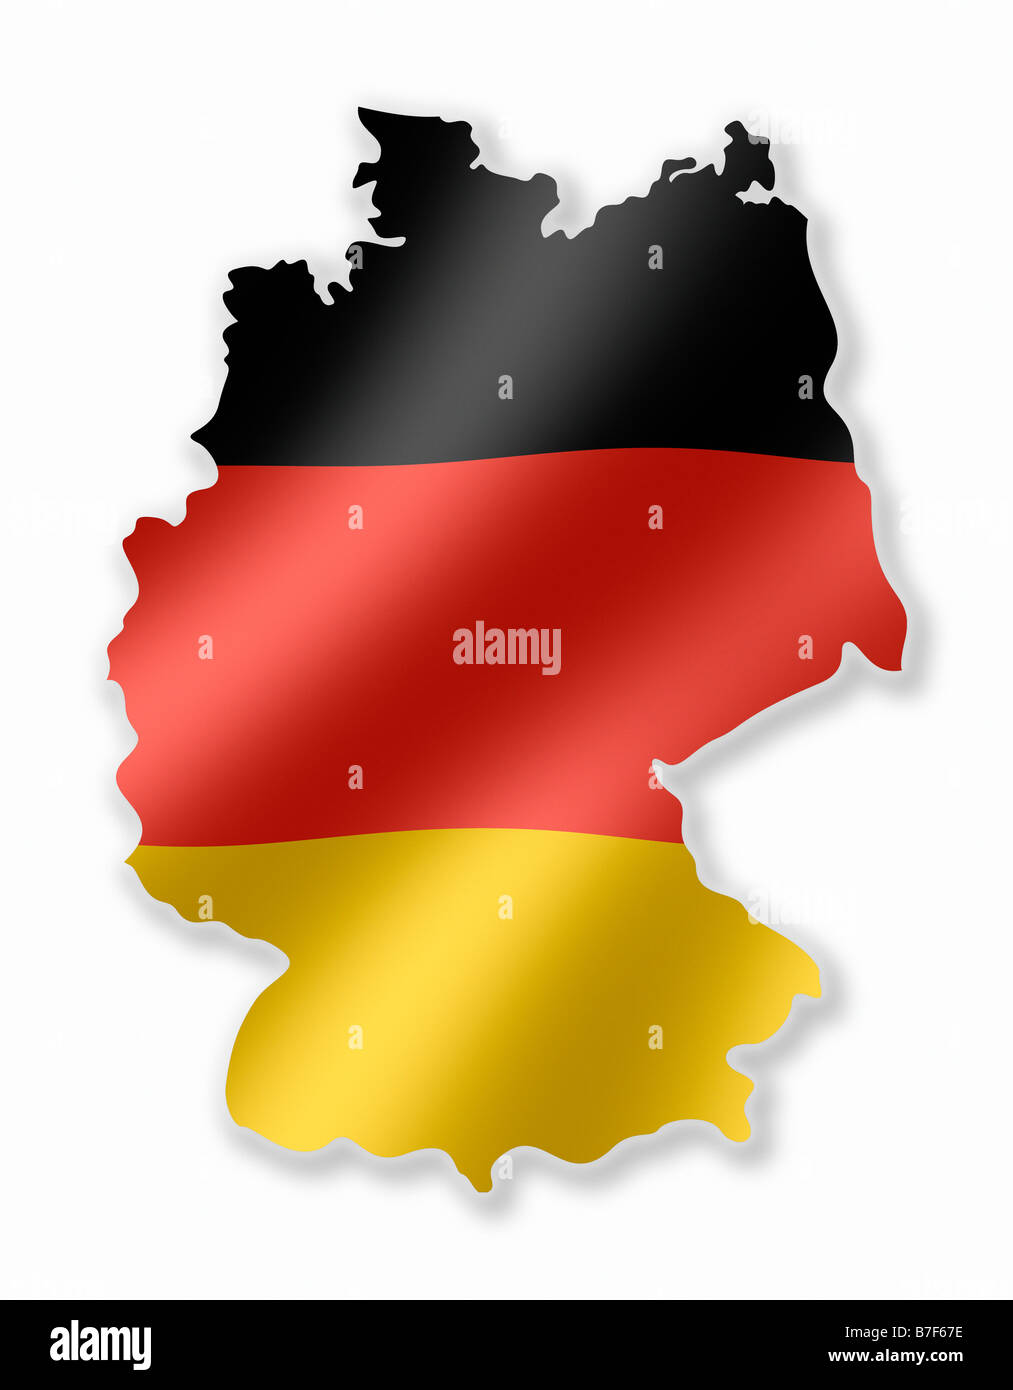 Deutschland Deutschland Deutschland Land Karte Umriss mit Nationalflagge im Inneren Stockfoto